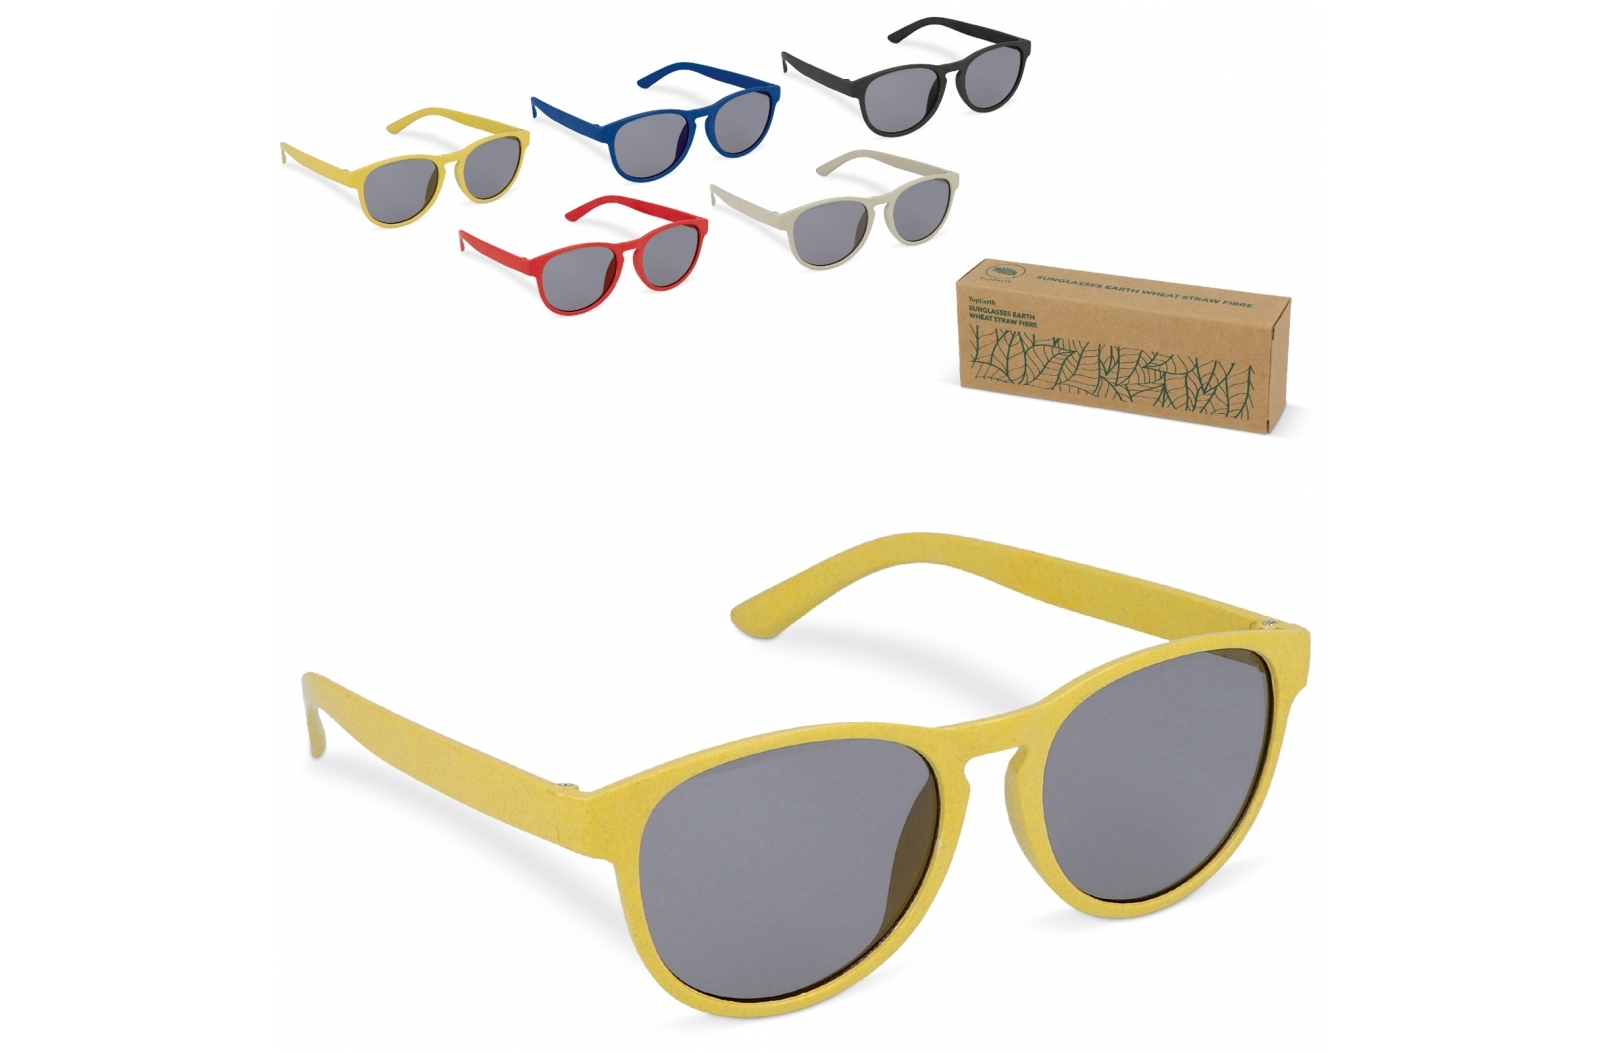 Sunglasses made from natural wheat straw fiber - Hebden Bridge